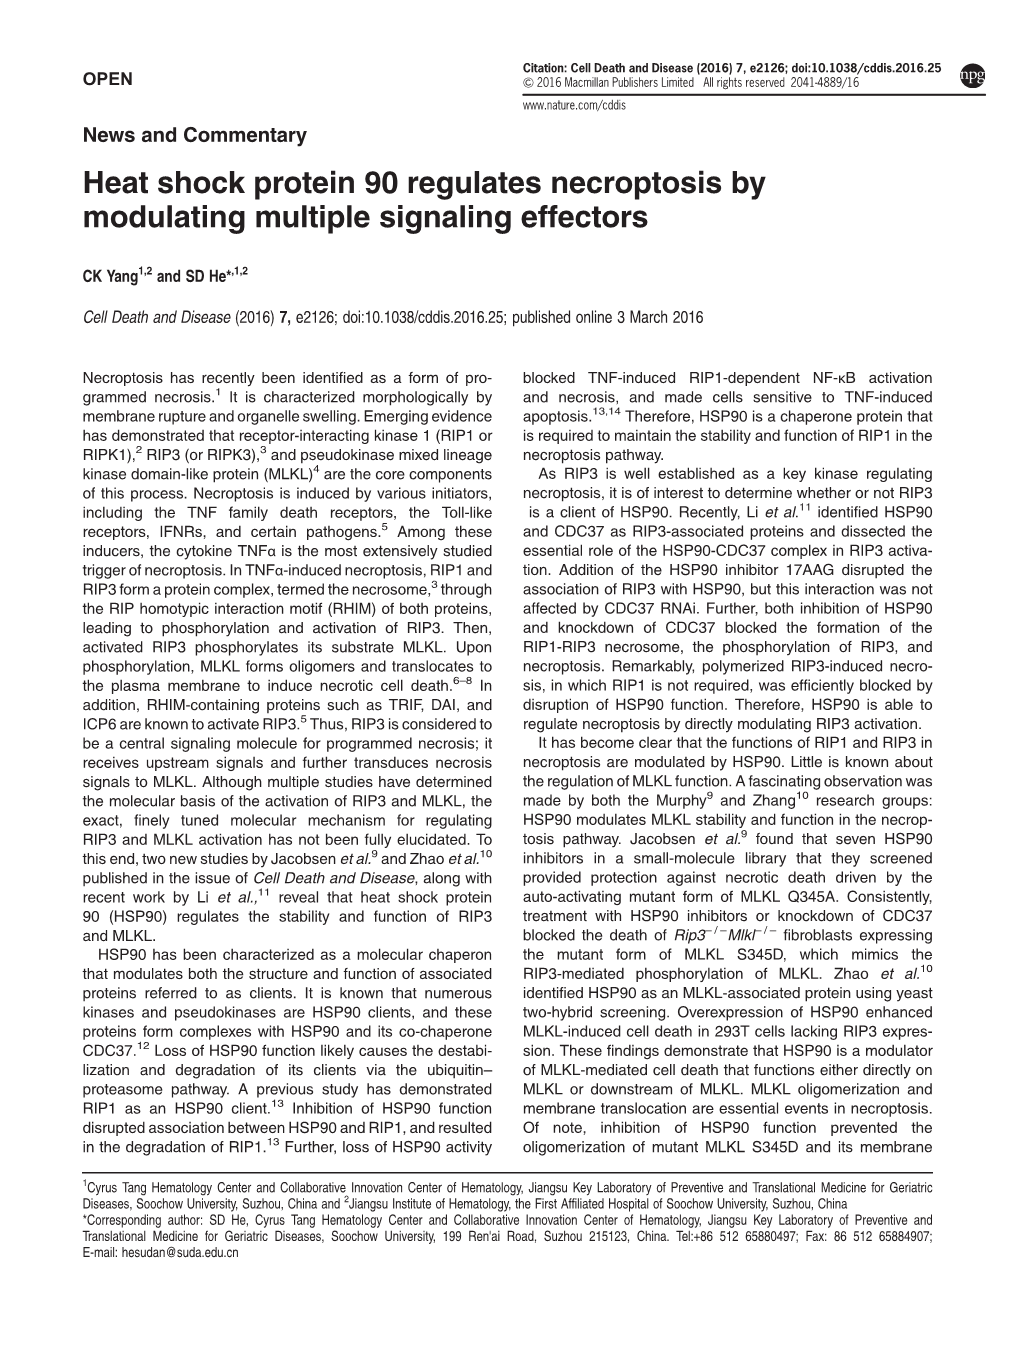 Heat Shock Protein 90 Regulates Necroptosis by Modulating Multiple Signaling Effectors